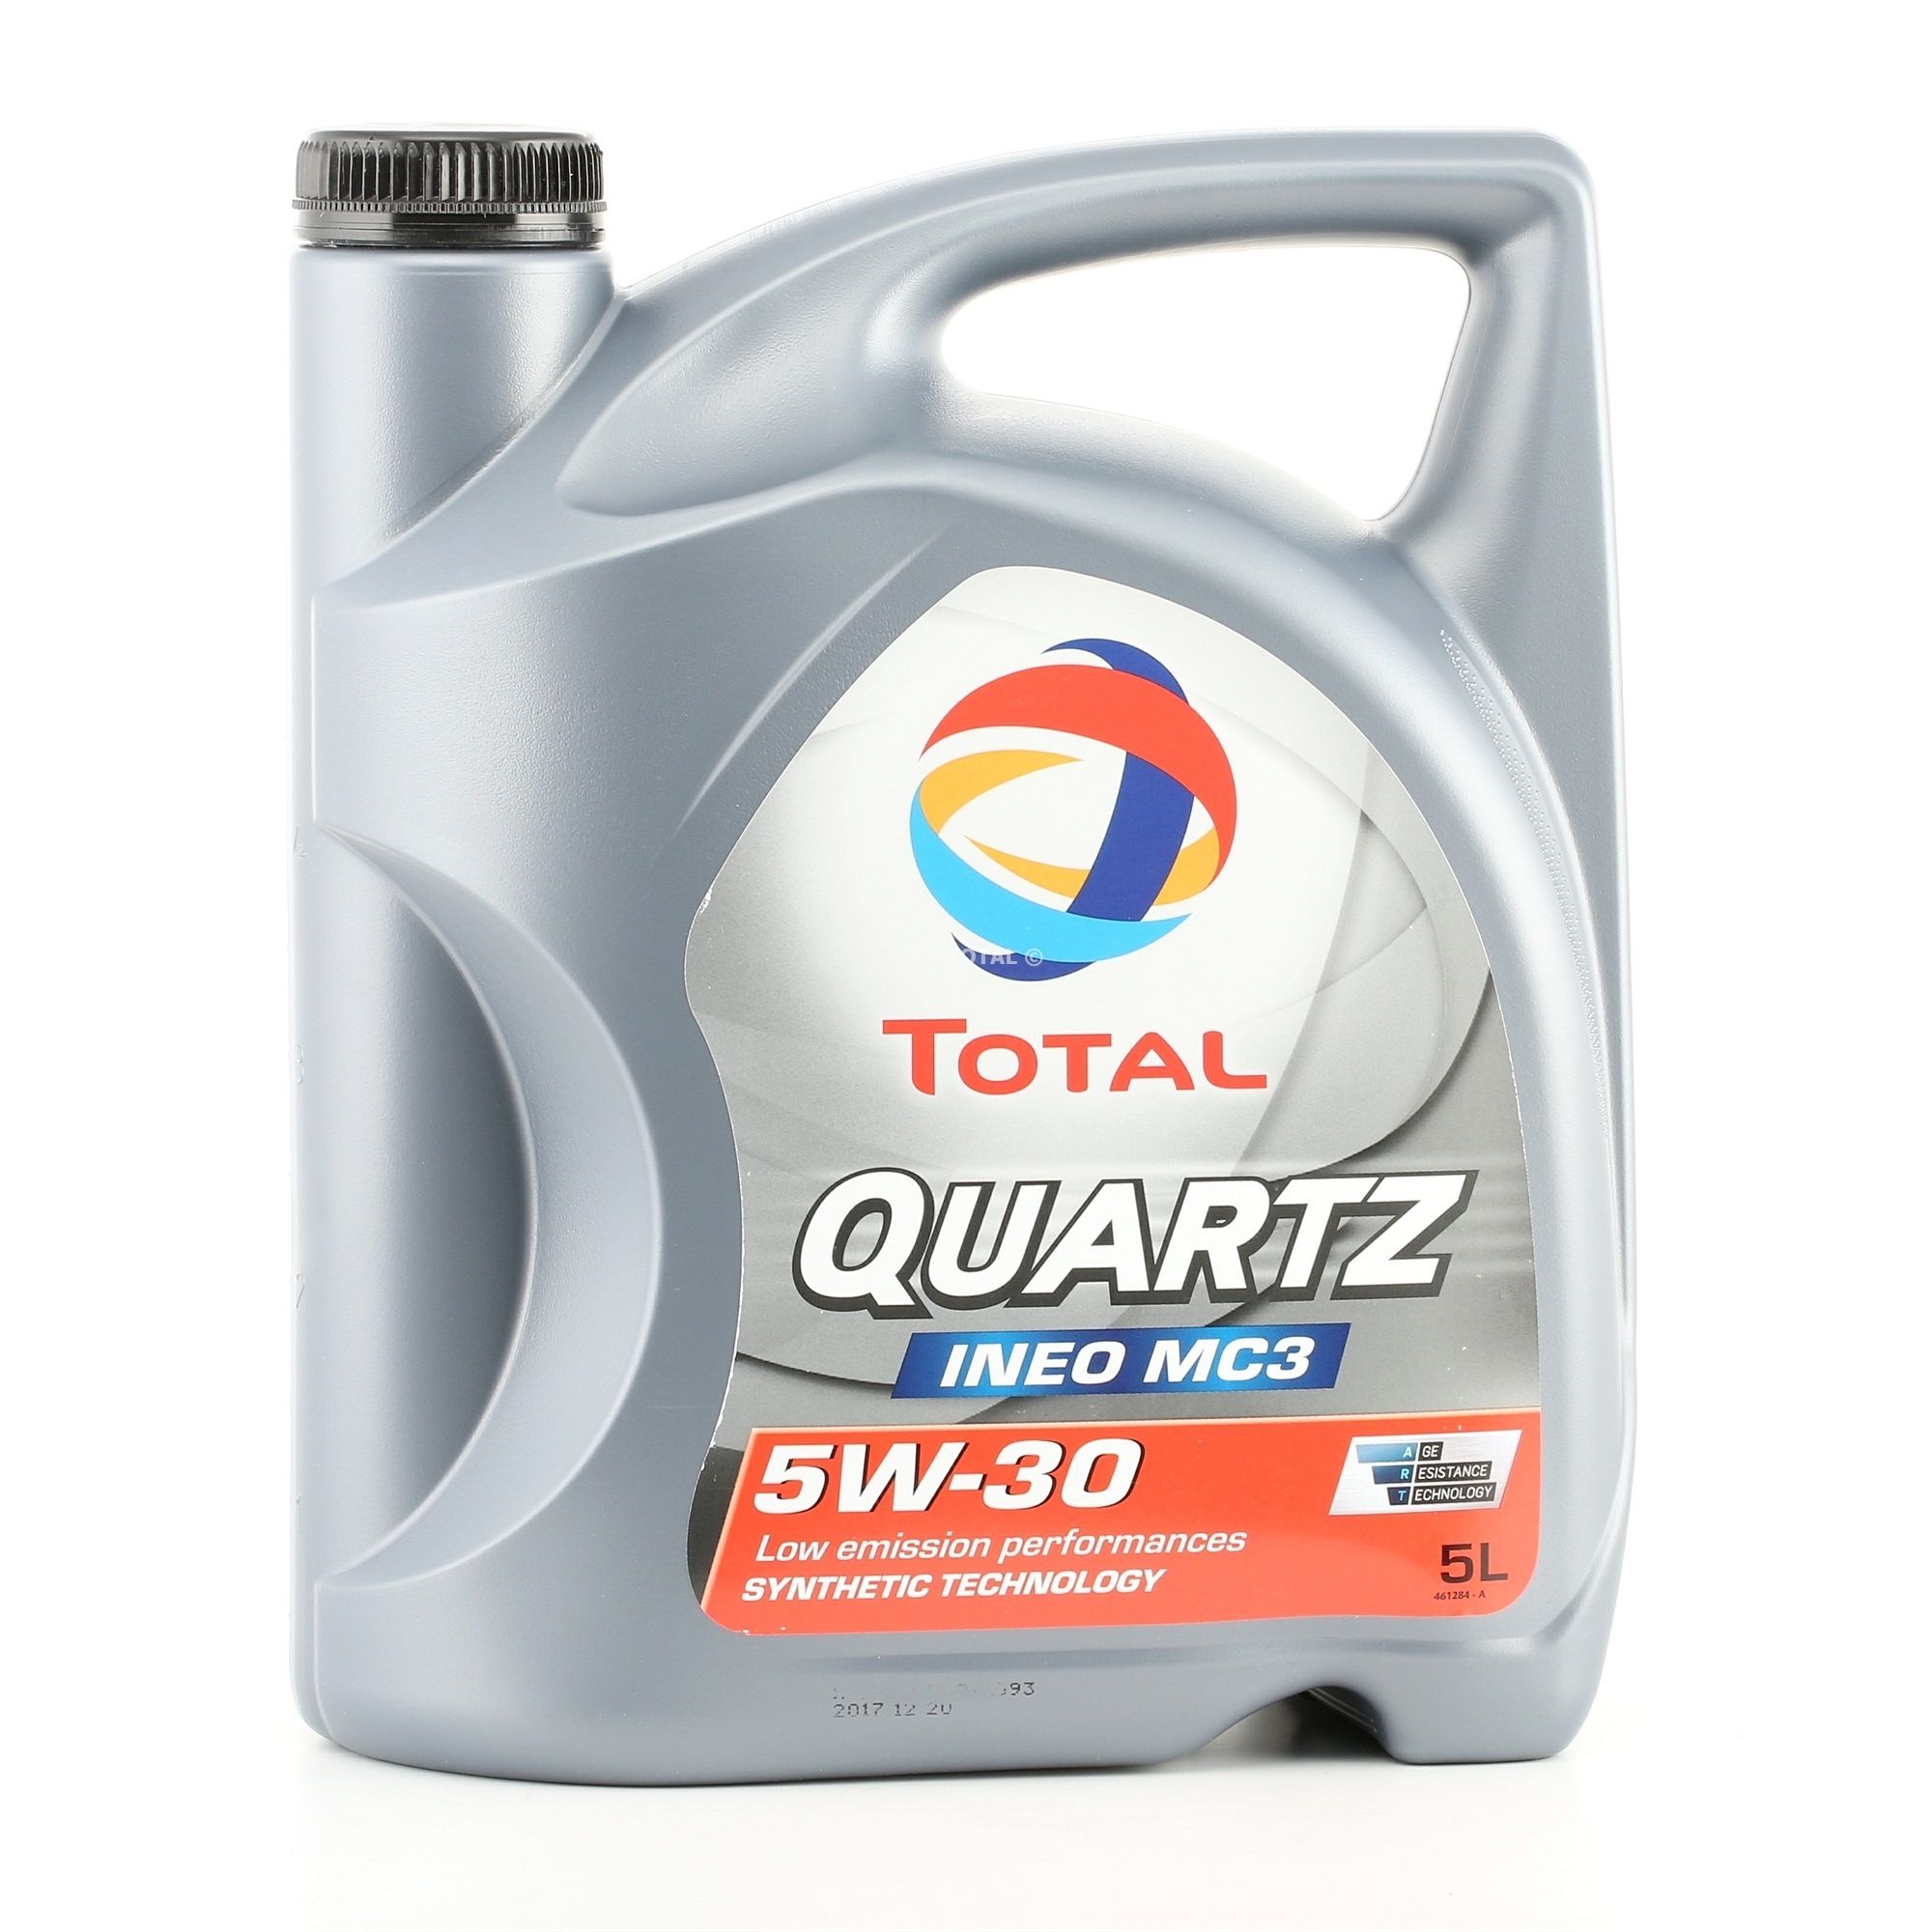 TOTAL 2204221 Motorolie 5W-30, 5L, Synthetische olie Mazda in originele kwaliteit